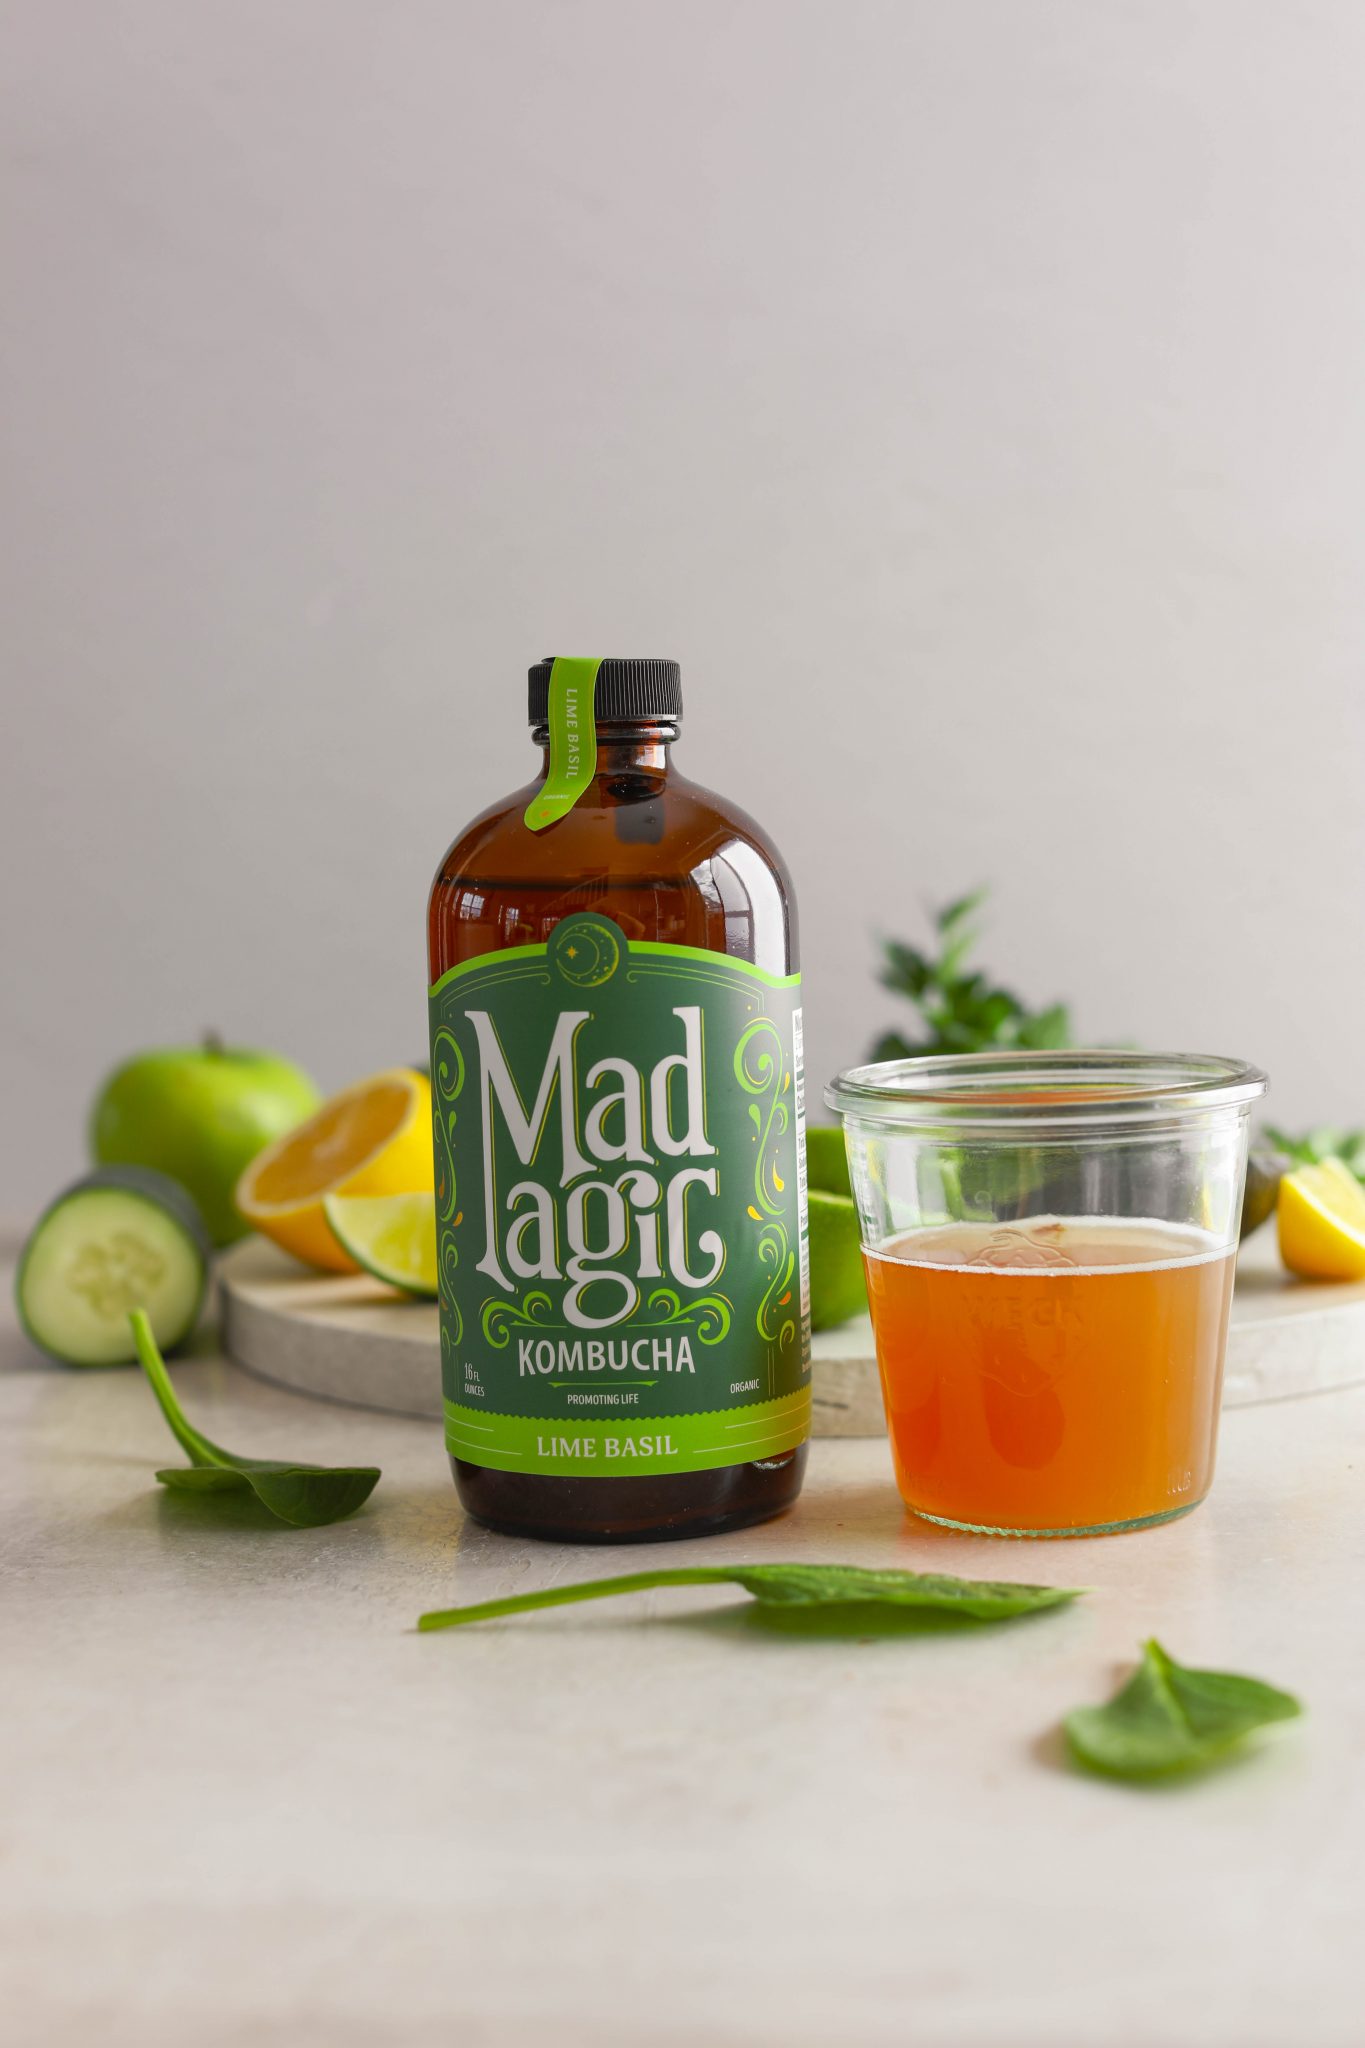 Mad Magic Lime Basil 